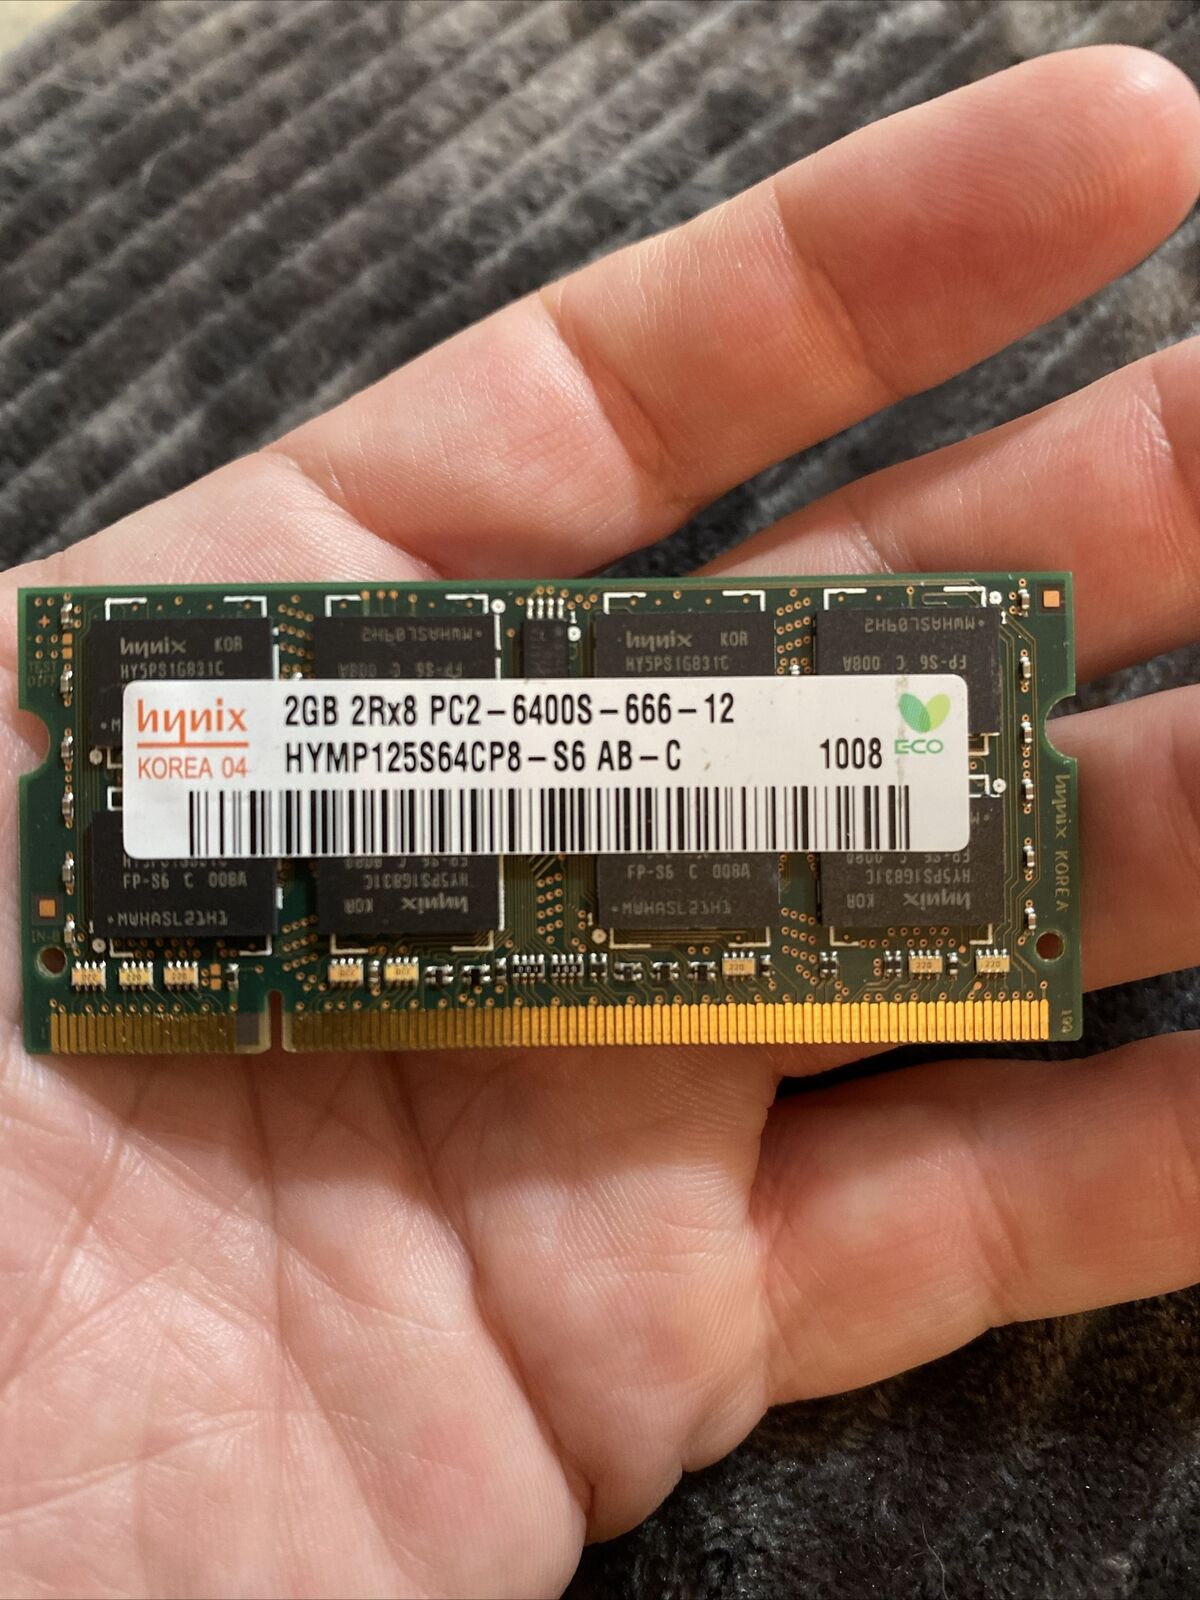 Hynix 2GB 2Rx8 PC2-6400S-666-12-E3 800MHz CF7 200Pin 1.8V SODIMM Laptop Memory